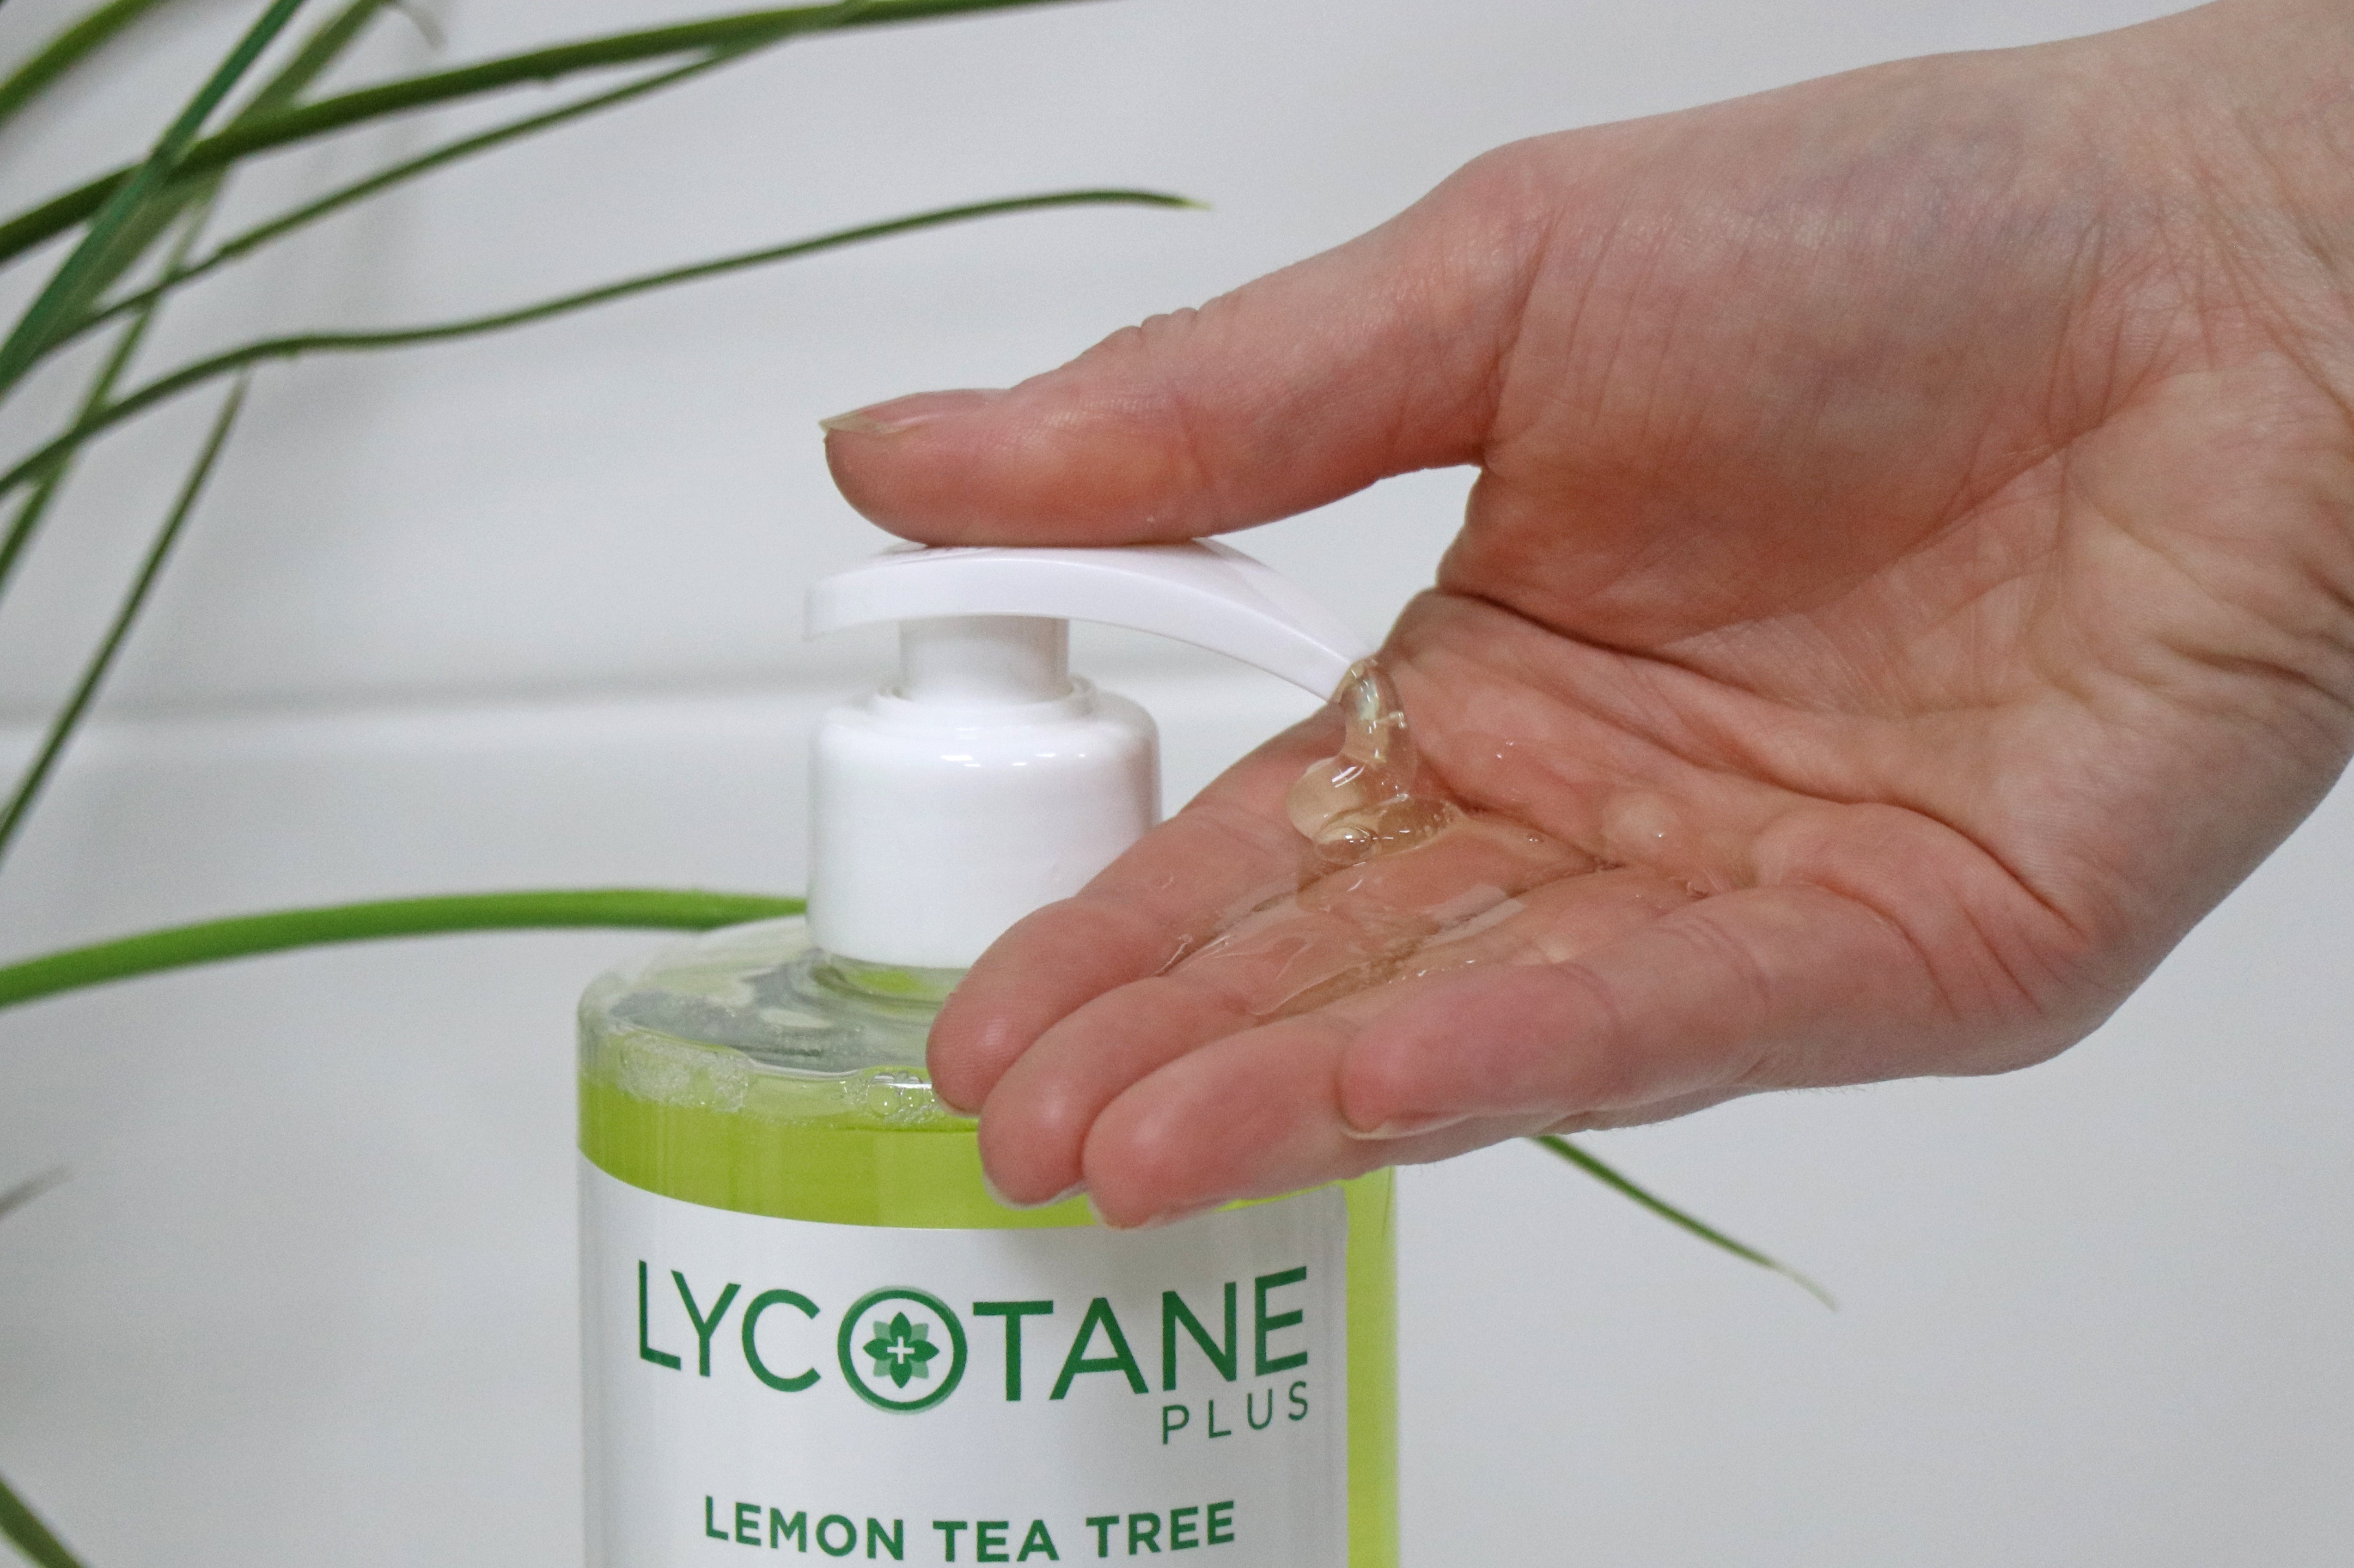 LYCOTANE REPAIR HAND BALM + LEMON TEA TREE HAND WASH Duo